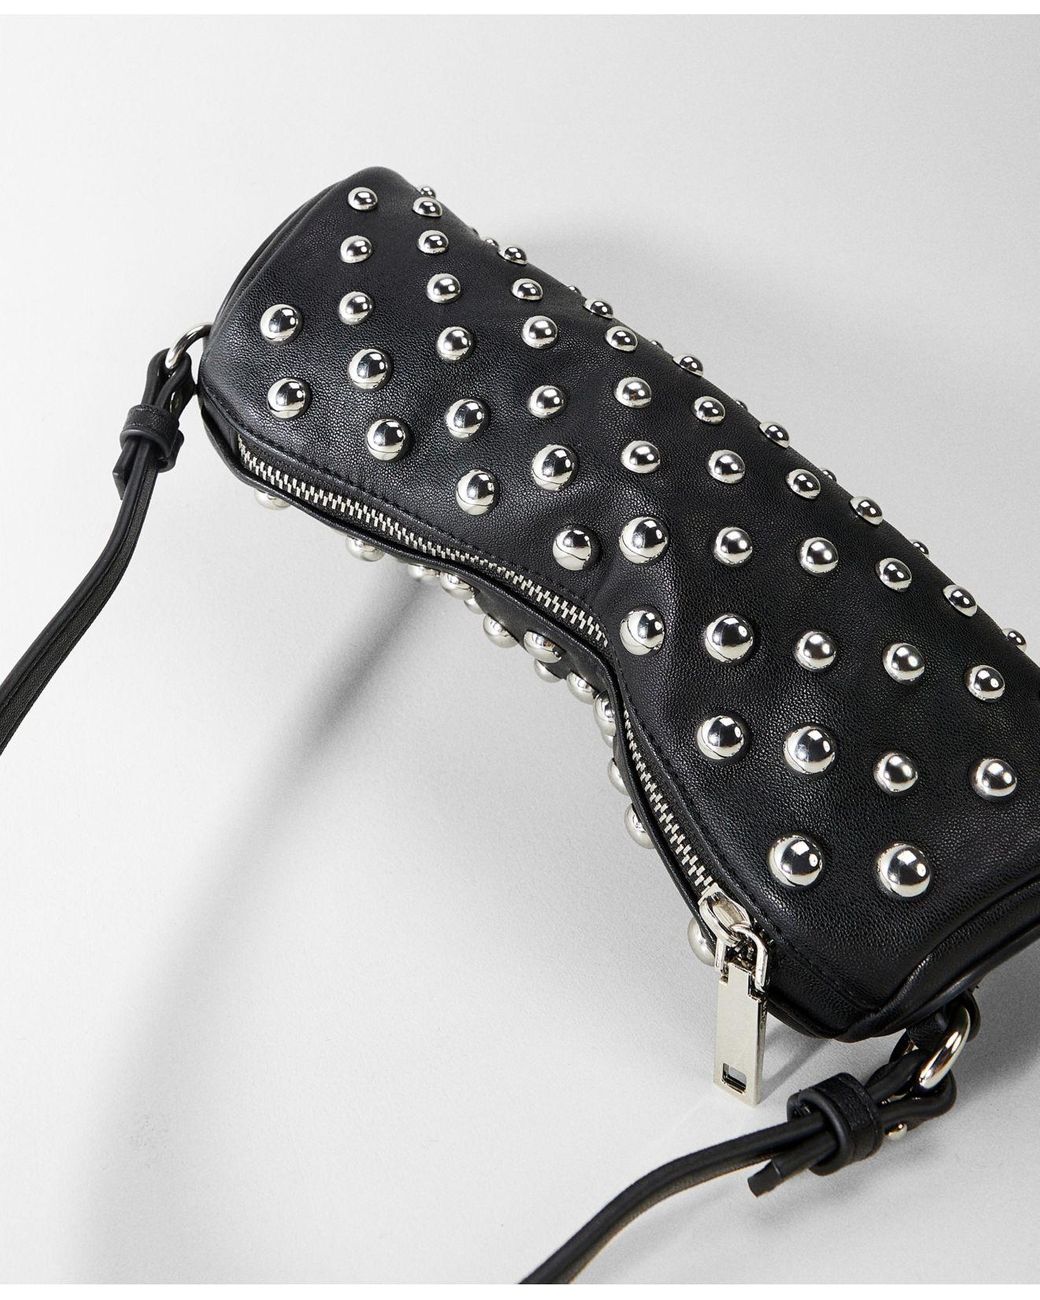 MMS Design Studio Purse Handbag Satchel Blue Studded-… - Gem